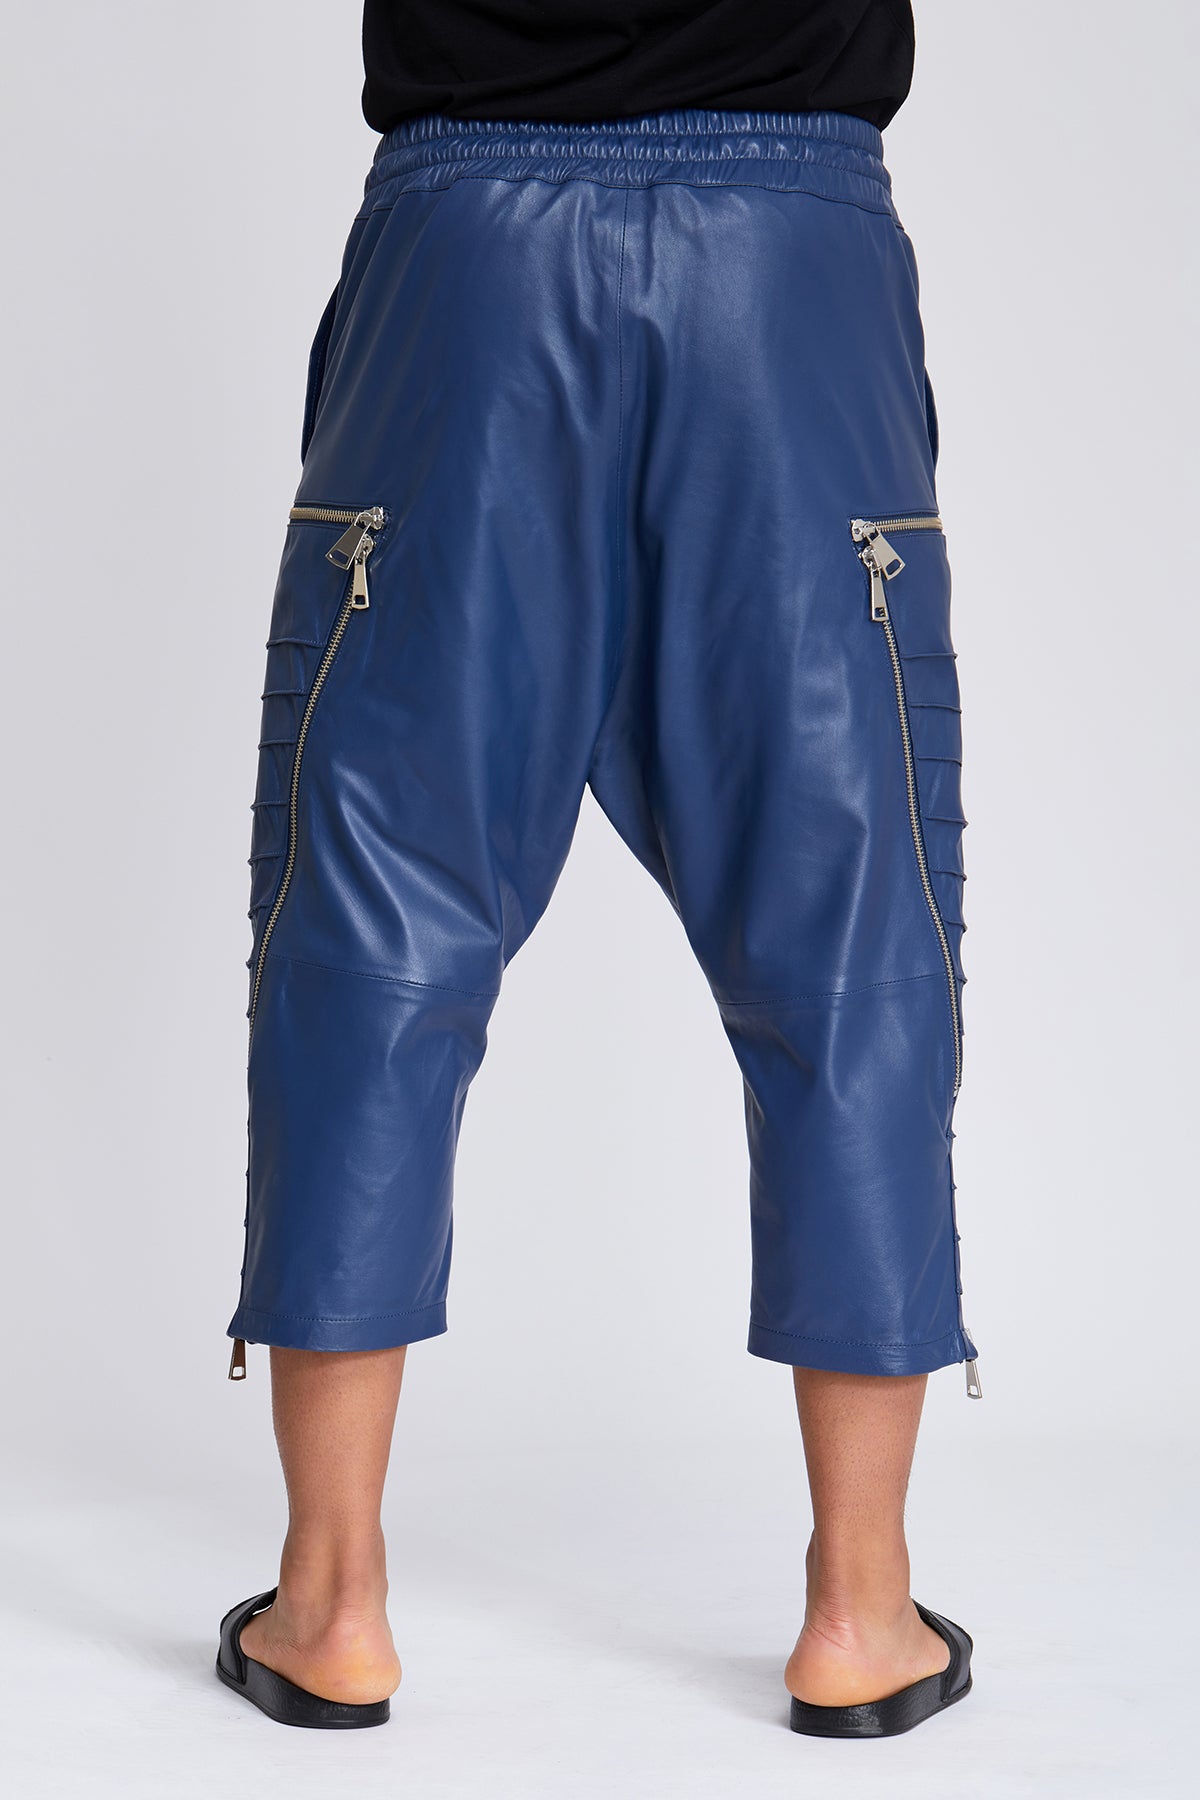 Men Casual Capri Pants 3/4 Shorts Cargo Combat Trousers Pocket Daily  Fashion New | eBay